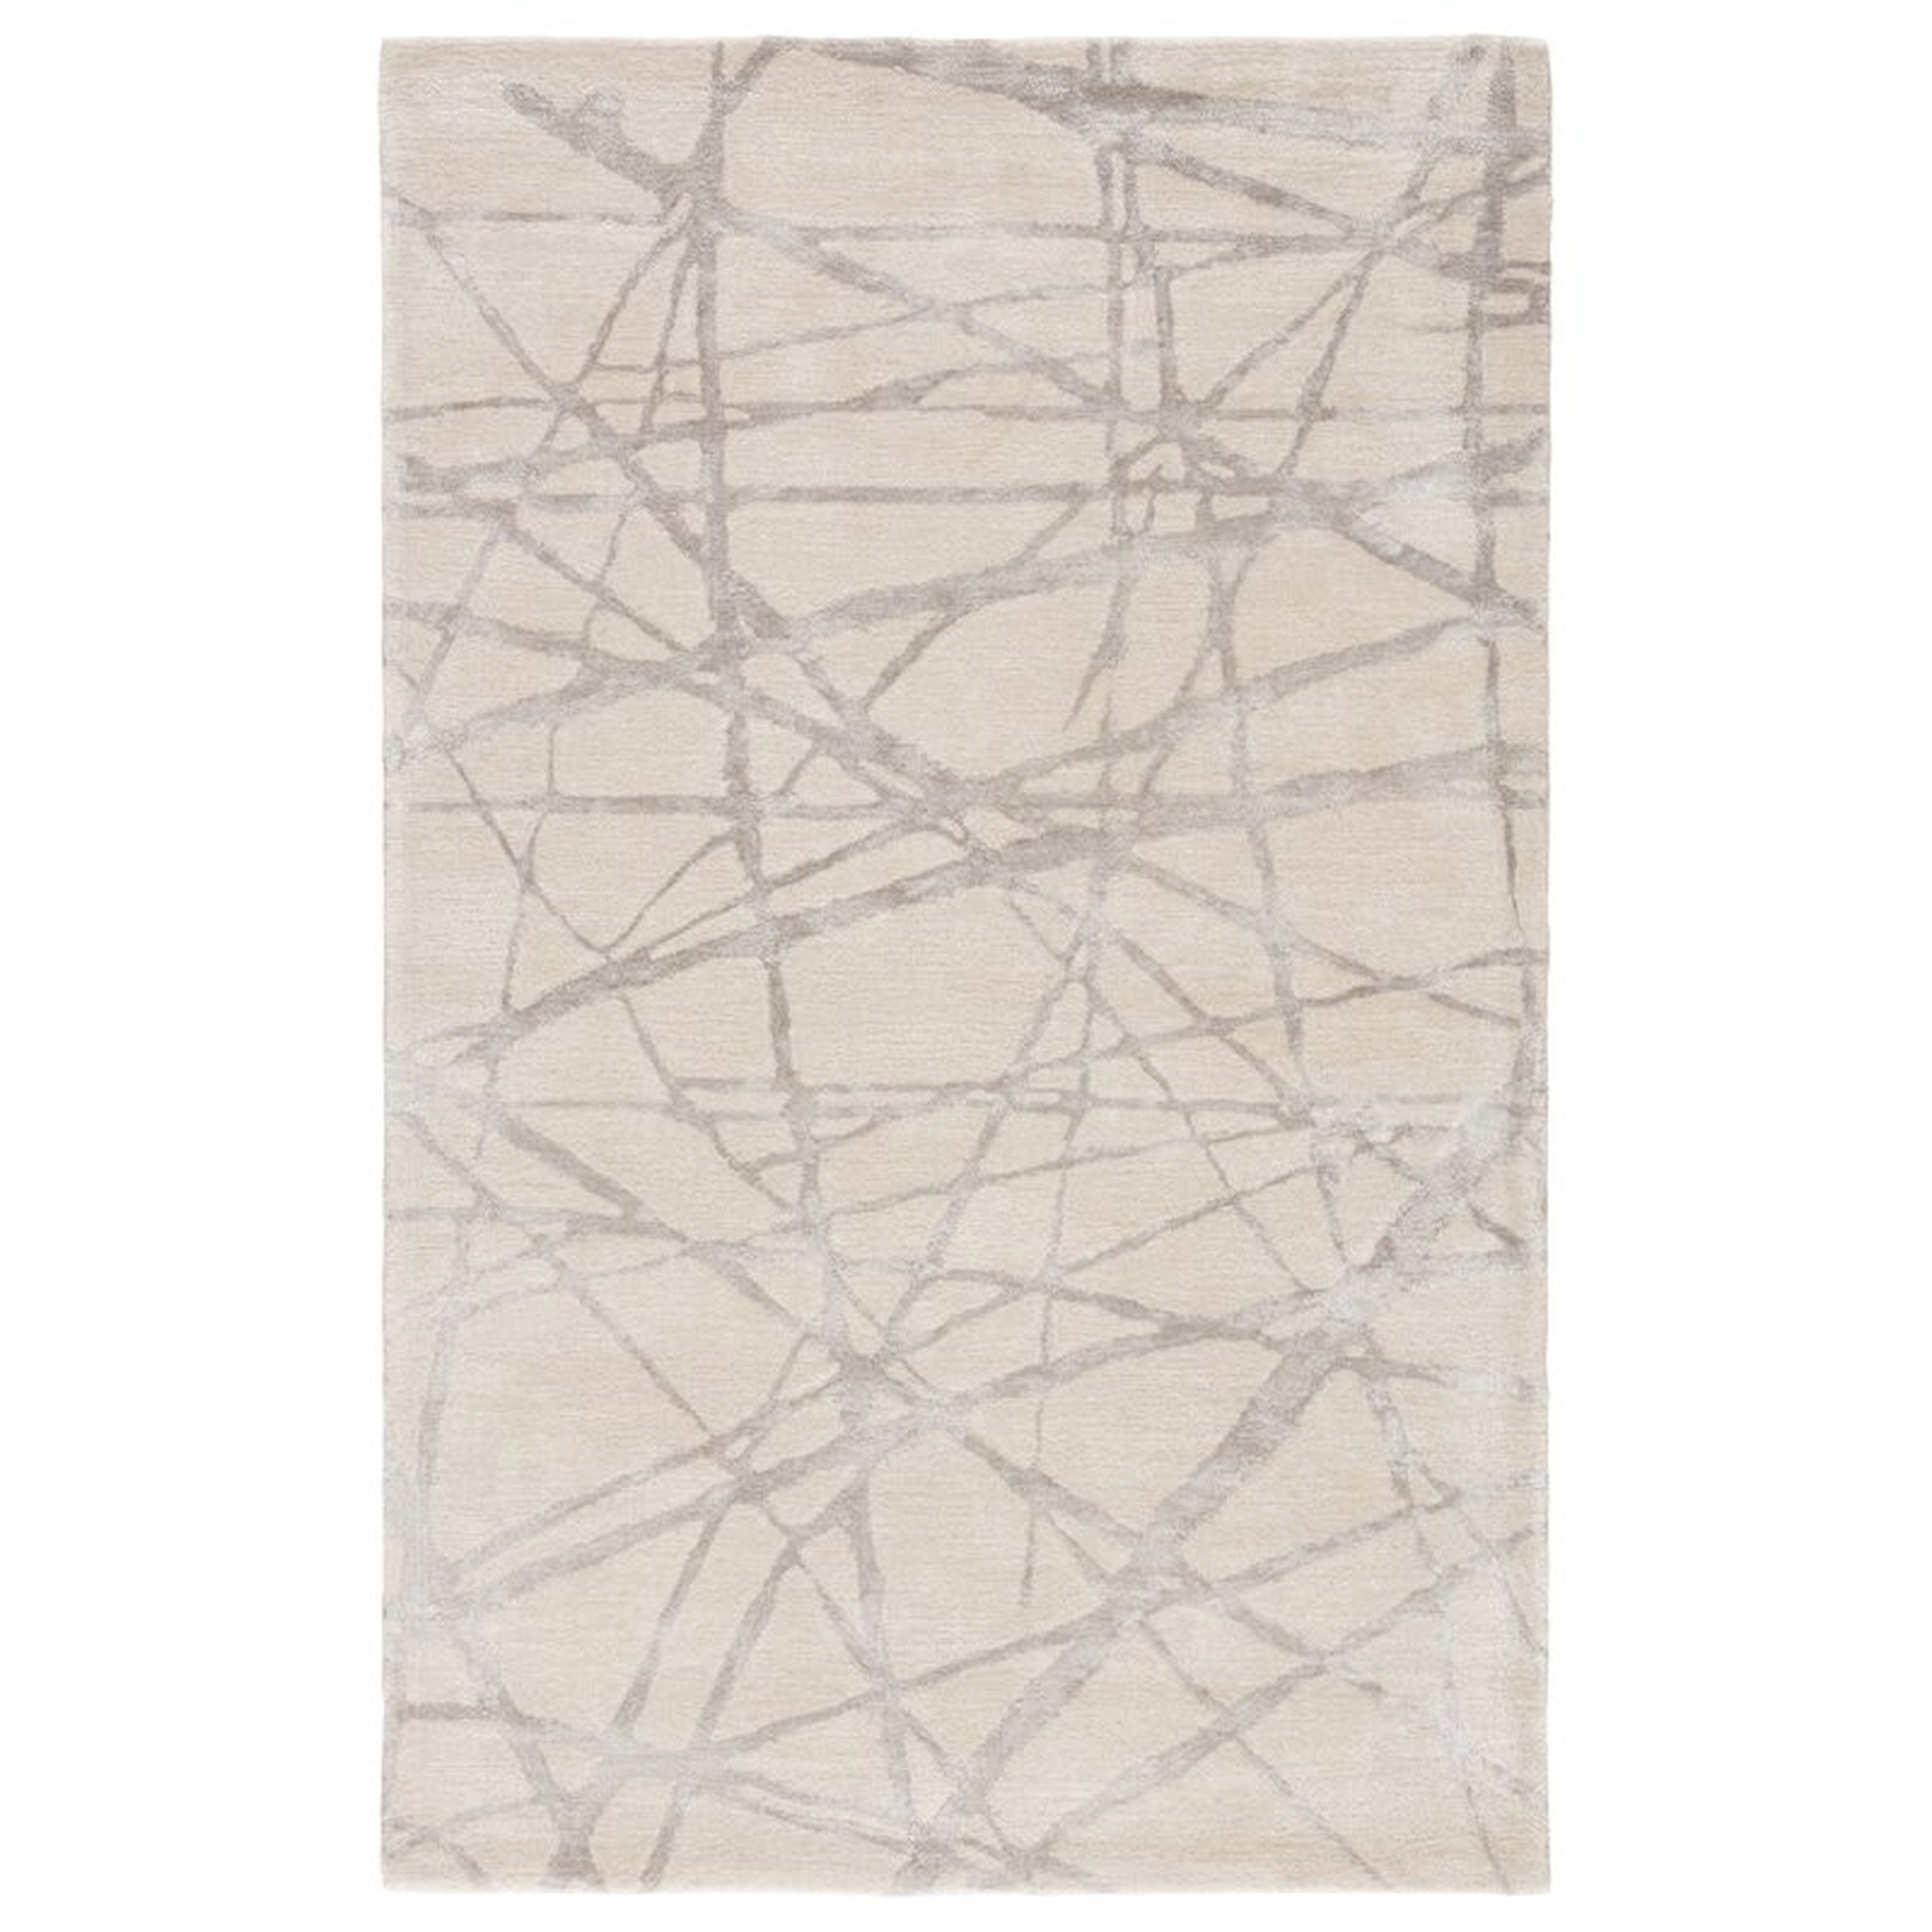 Nikki Chu Jaipur Living Abstract Handmade Tufted Gray/Neutral Beige Area Rug Rug Size: Rectangle 8' x 10' - Perigold